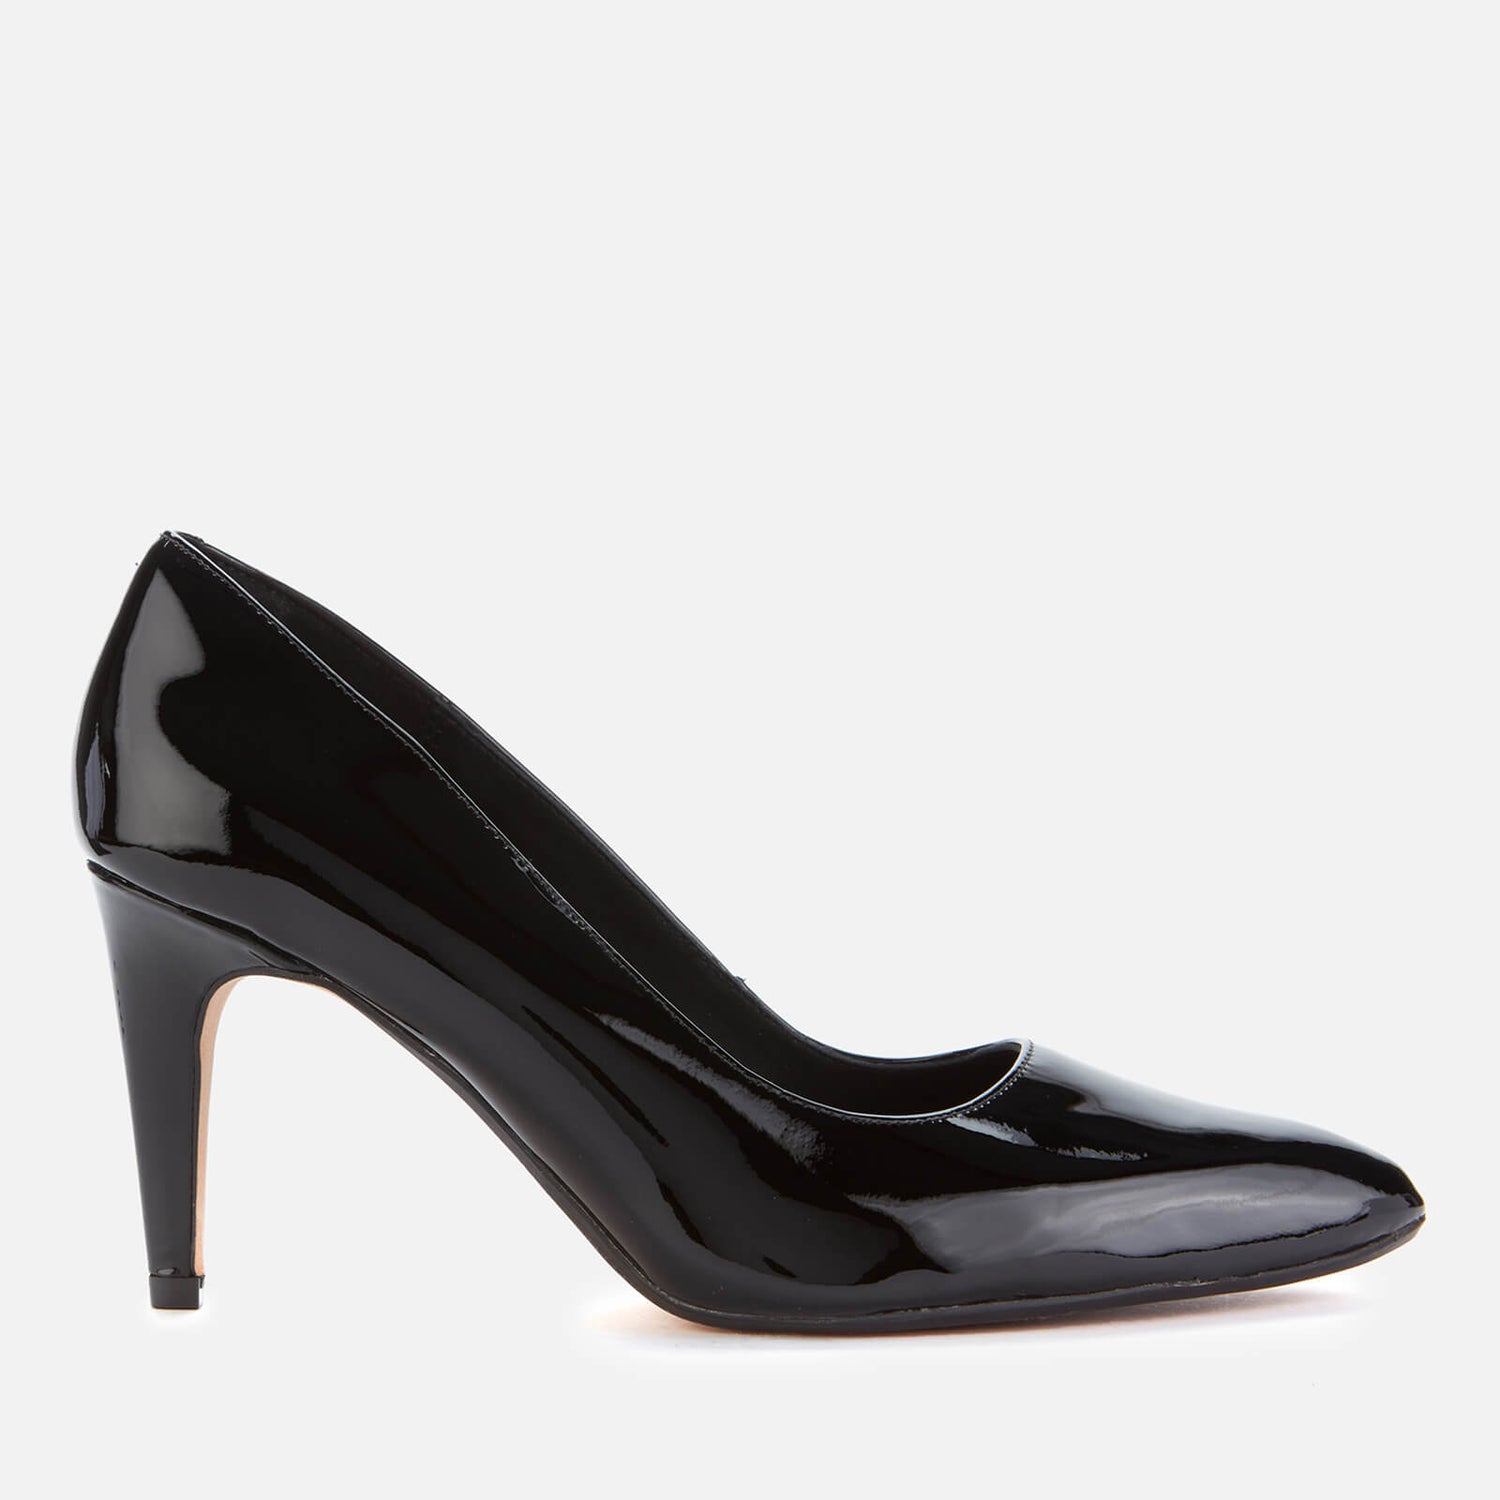 Clarks Women's Laina Rae 2 Patent Leather Court Shoes - Black | TheHut.com